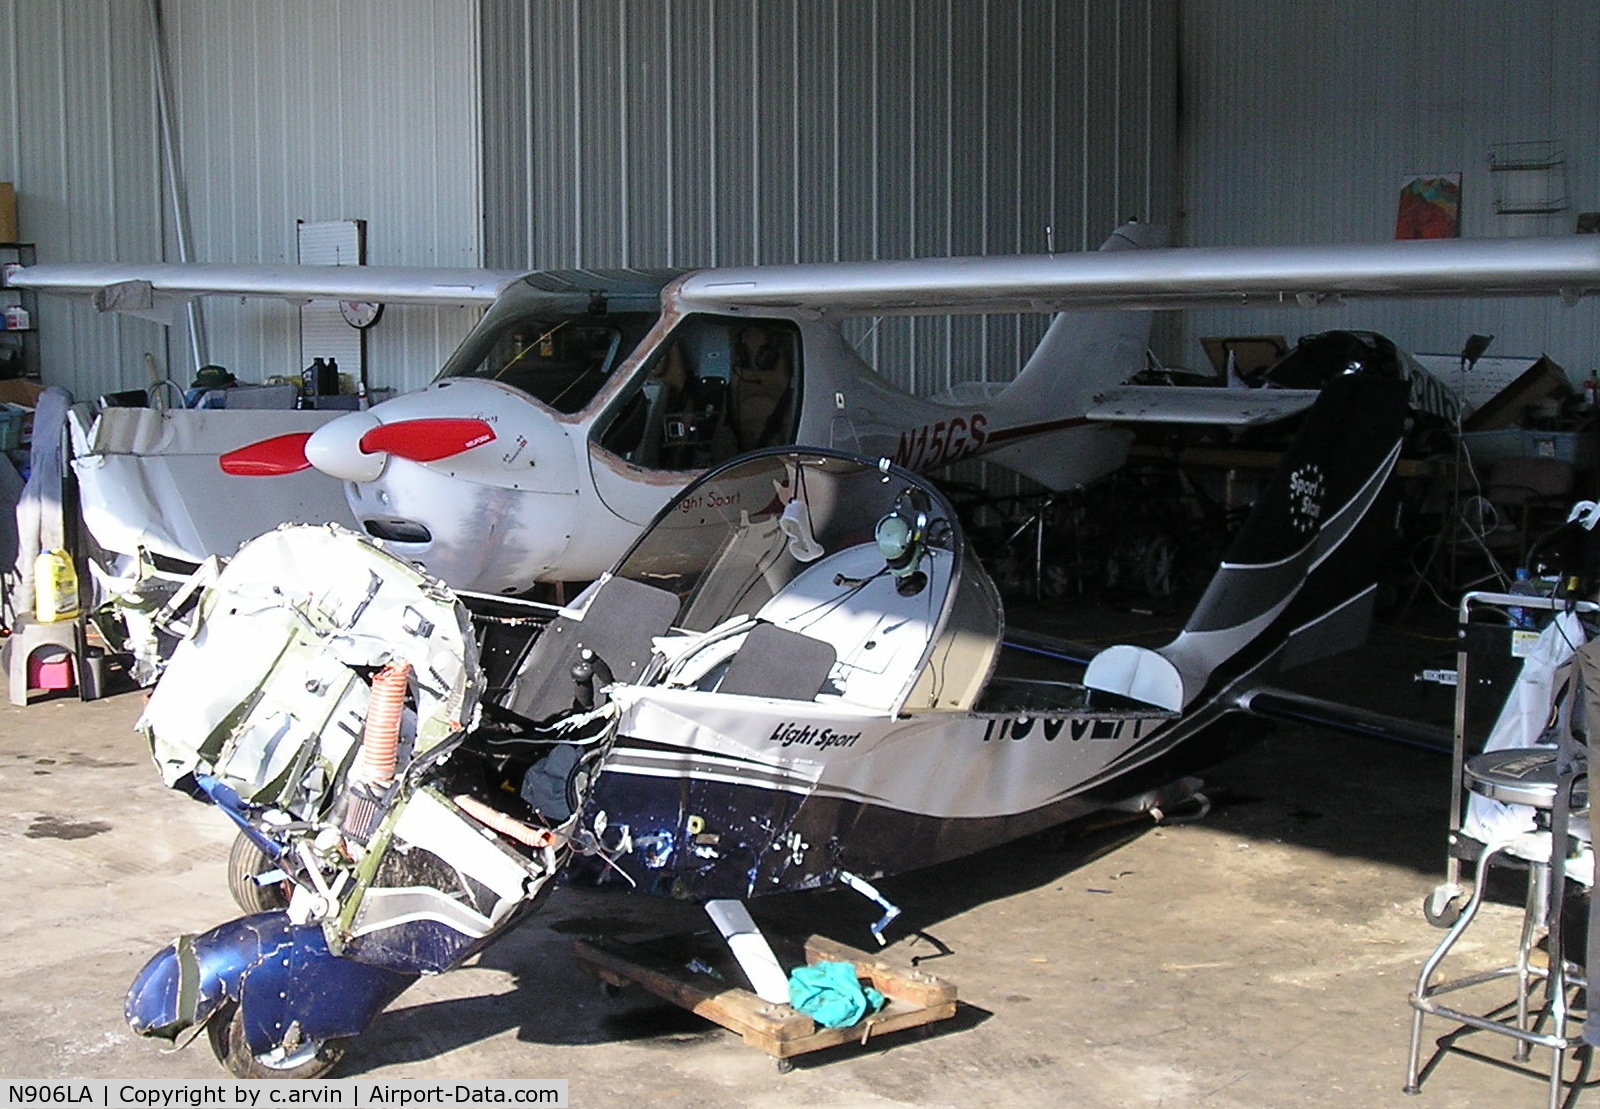 N906LA, 2007 Evektor-Aerotechnik Sportstar Plus C/N 20070906, after the accident